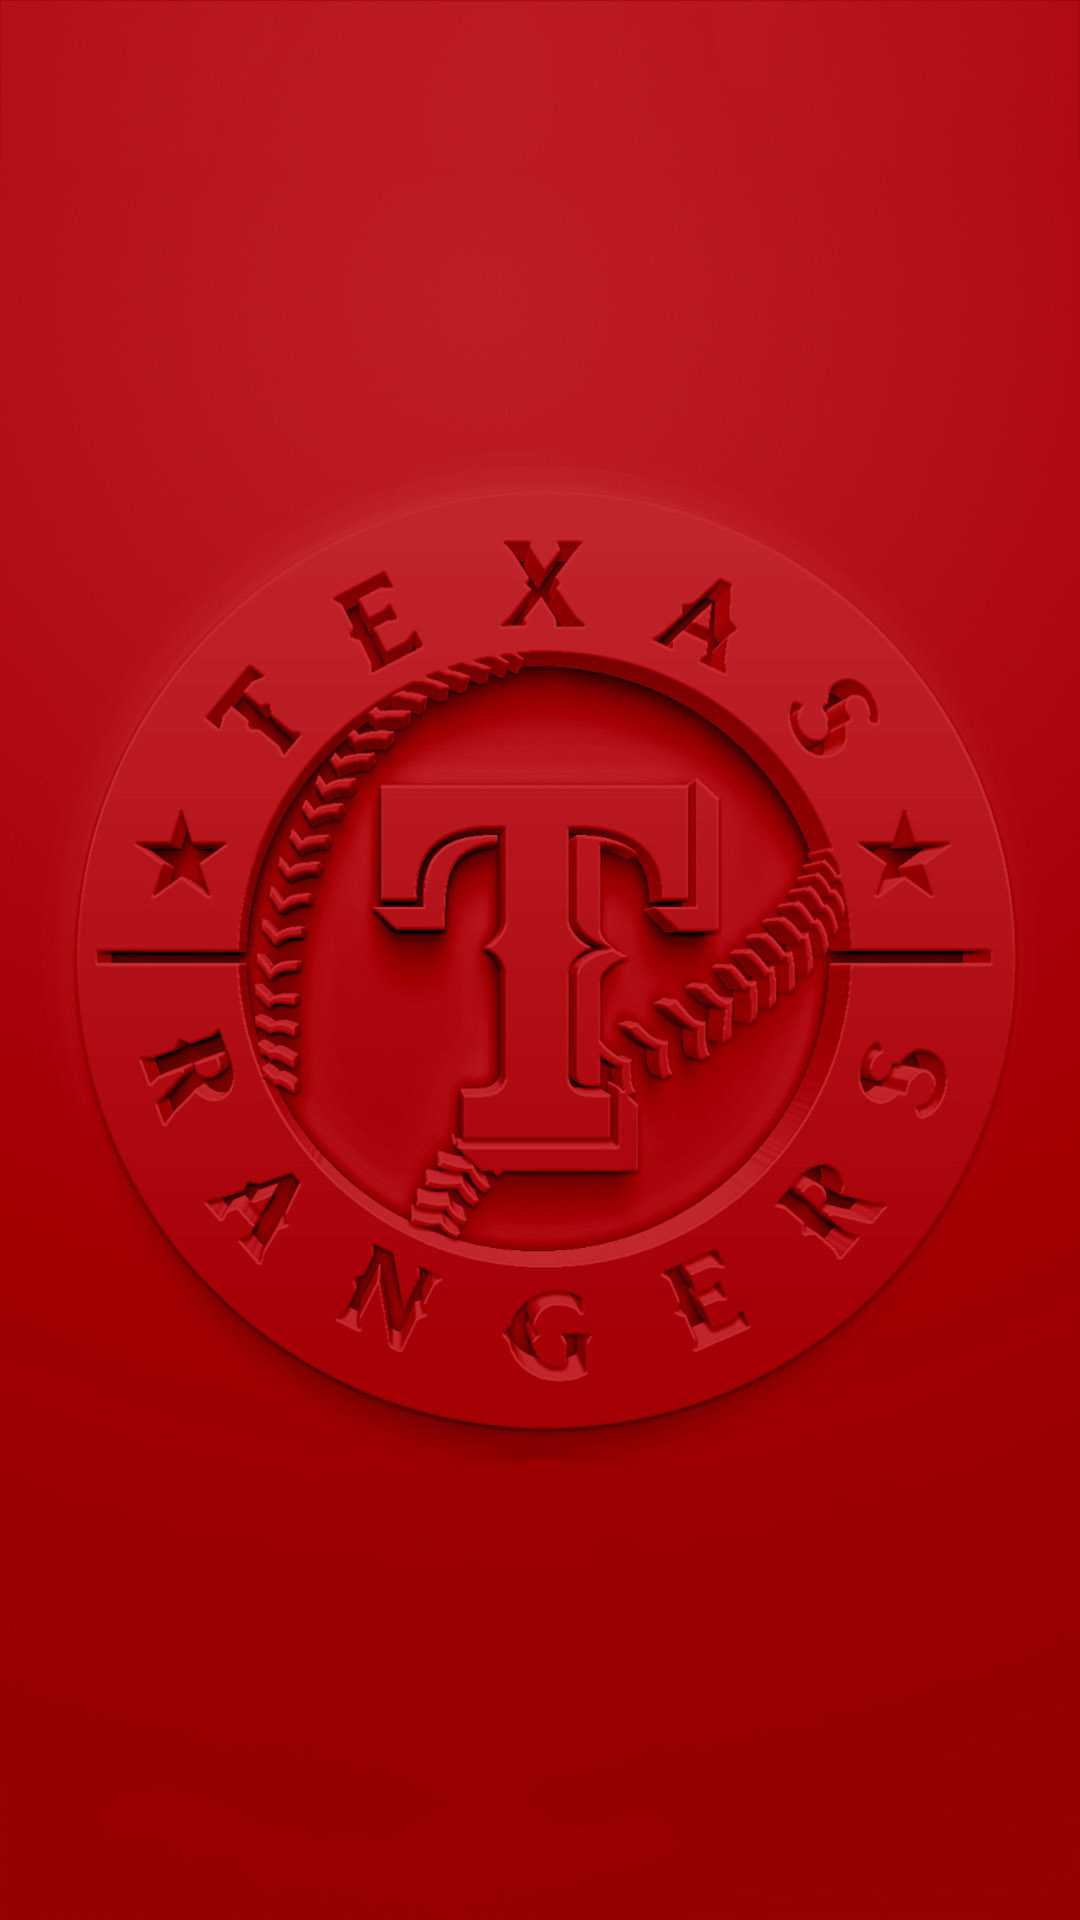 IPhone Texas Rangers Wallpaper iXpap